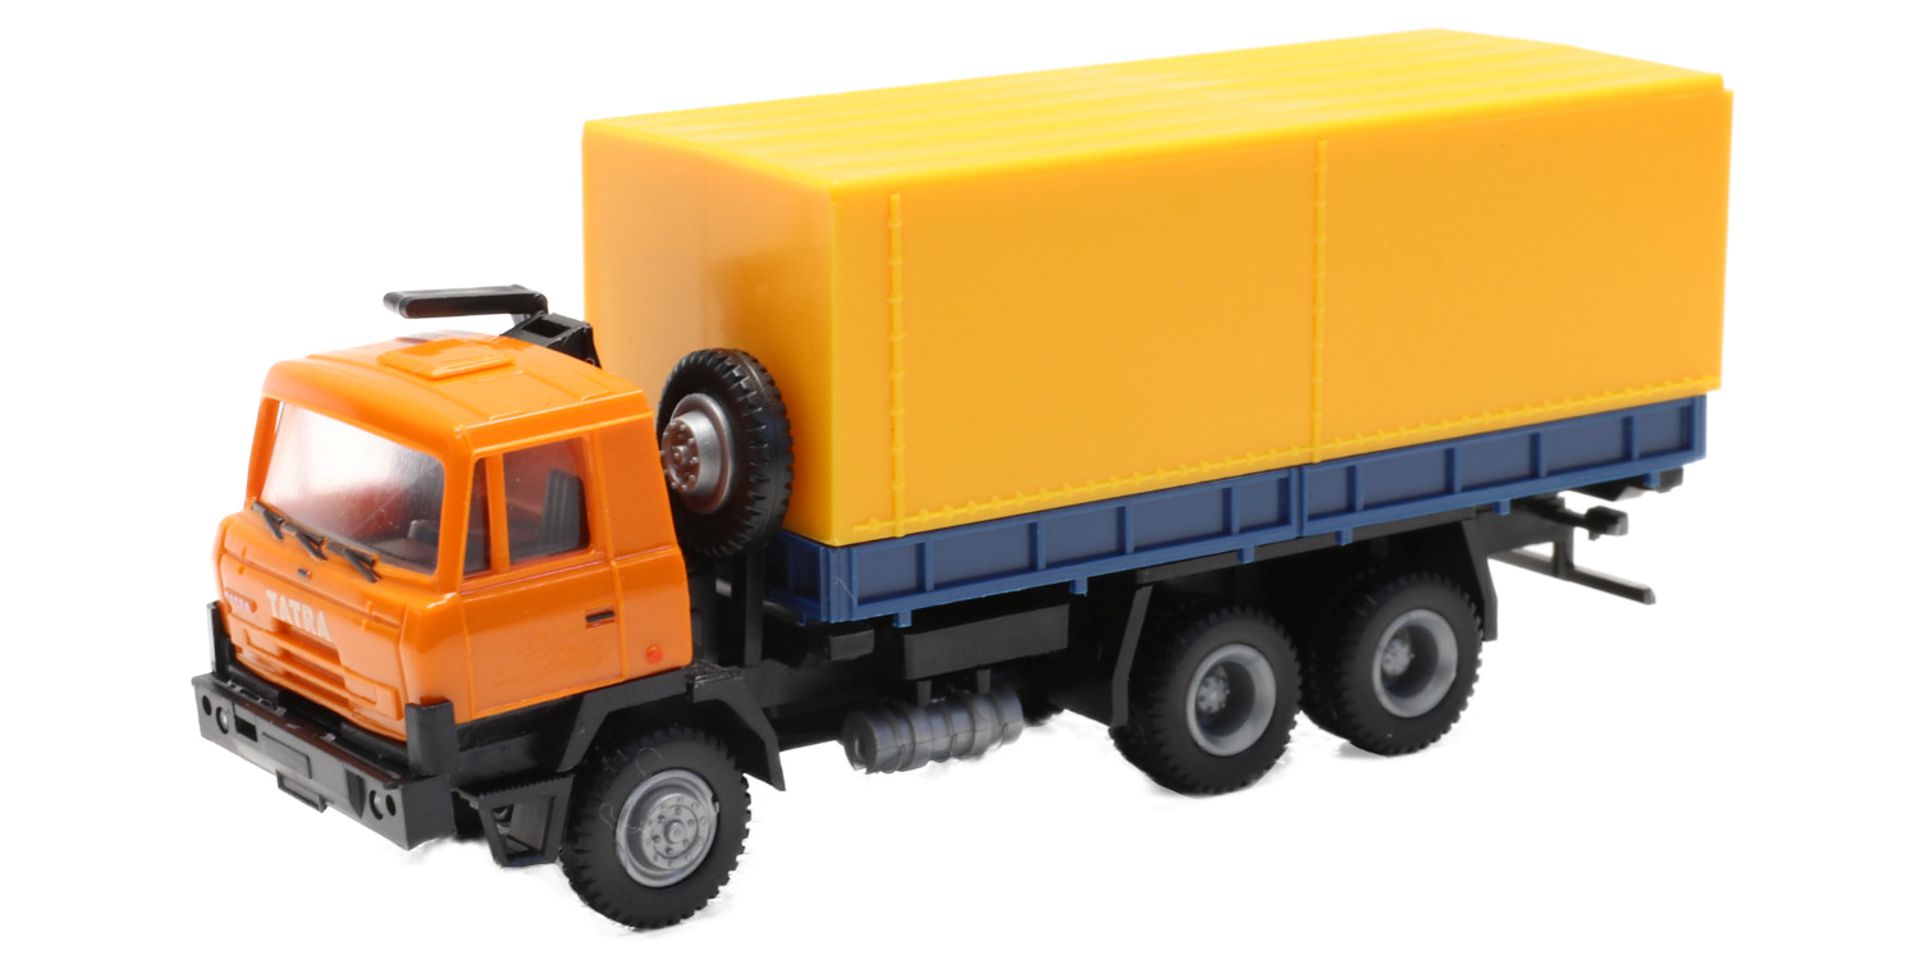 igra 66818051 - Tatra 815 orange Segel, Fertigmodell